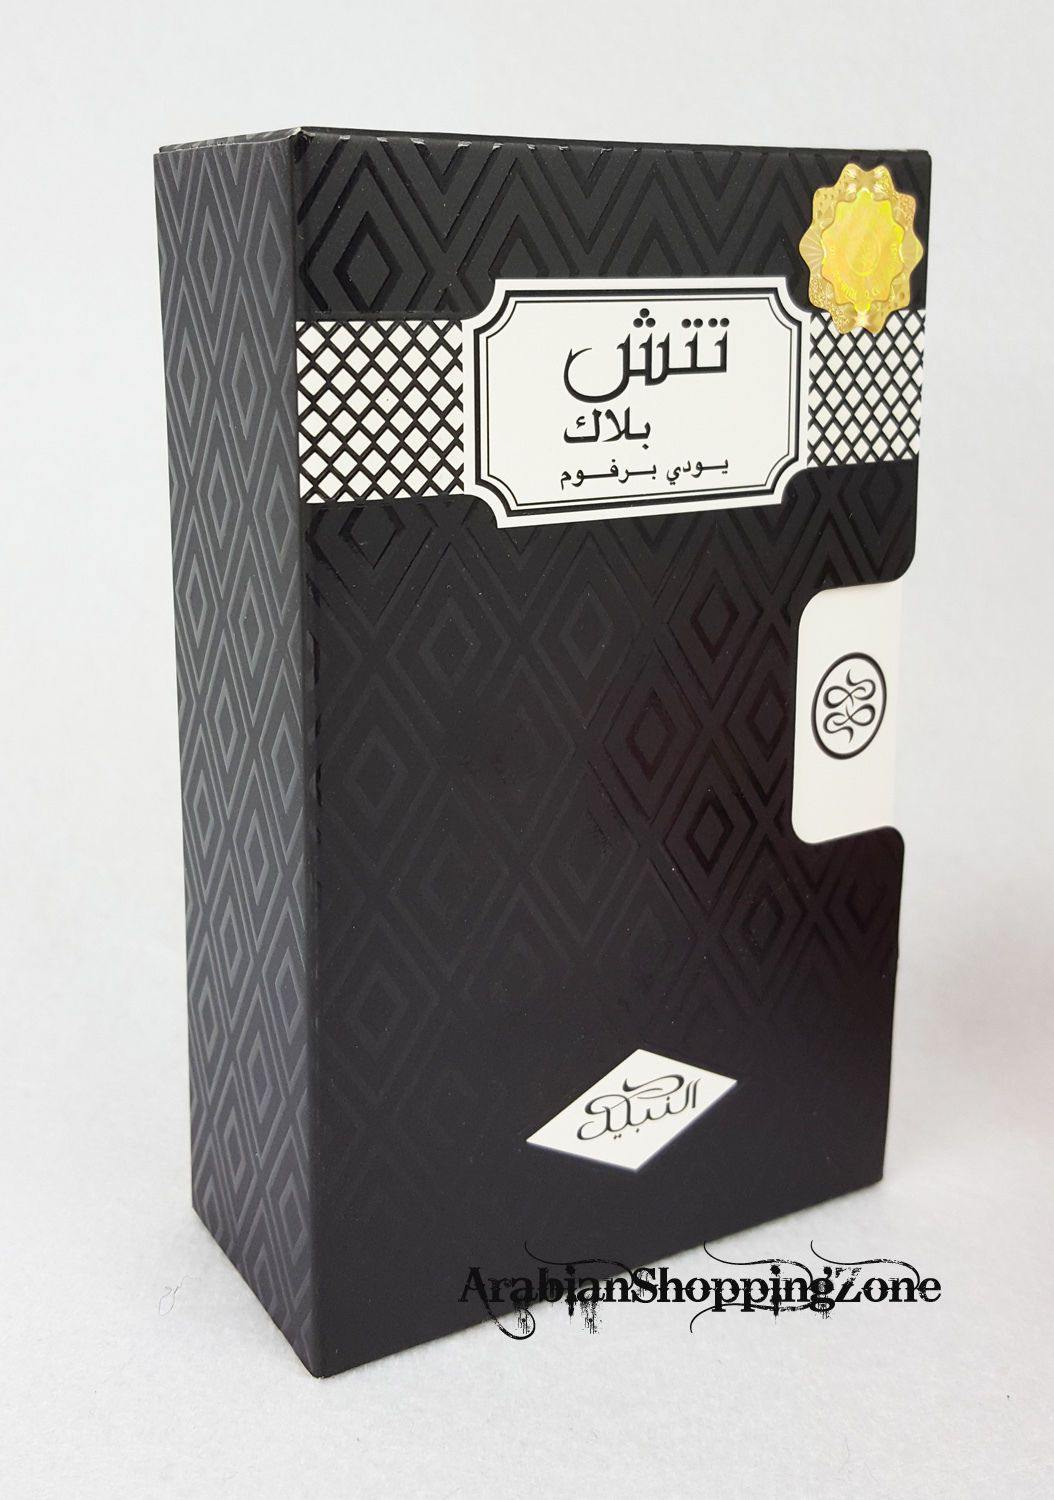 Touch Black Eau de Parfum By Nabeel 80ML Perfume Spray 2.64oz. - Arabian Shopping Zone